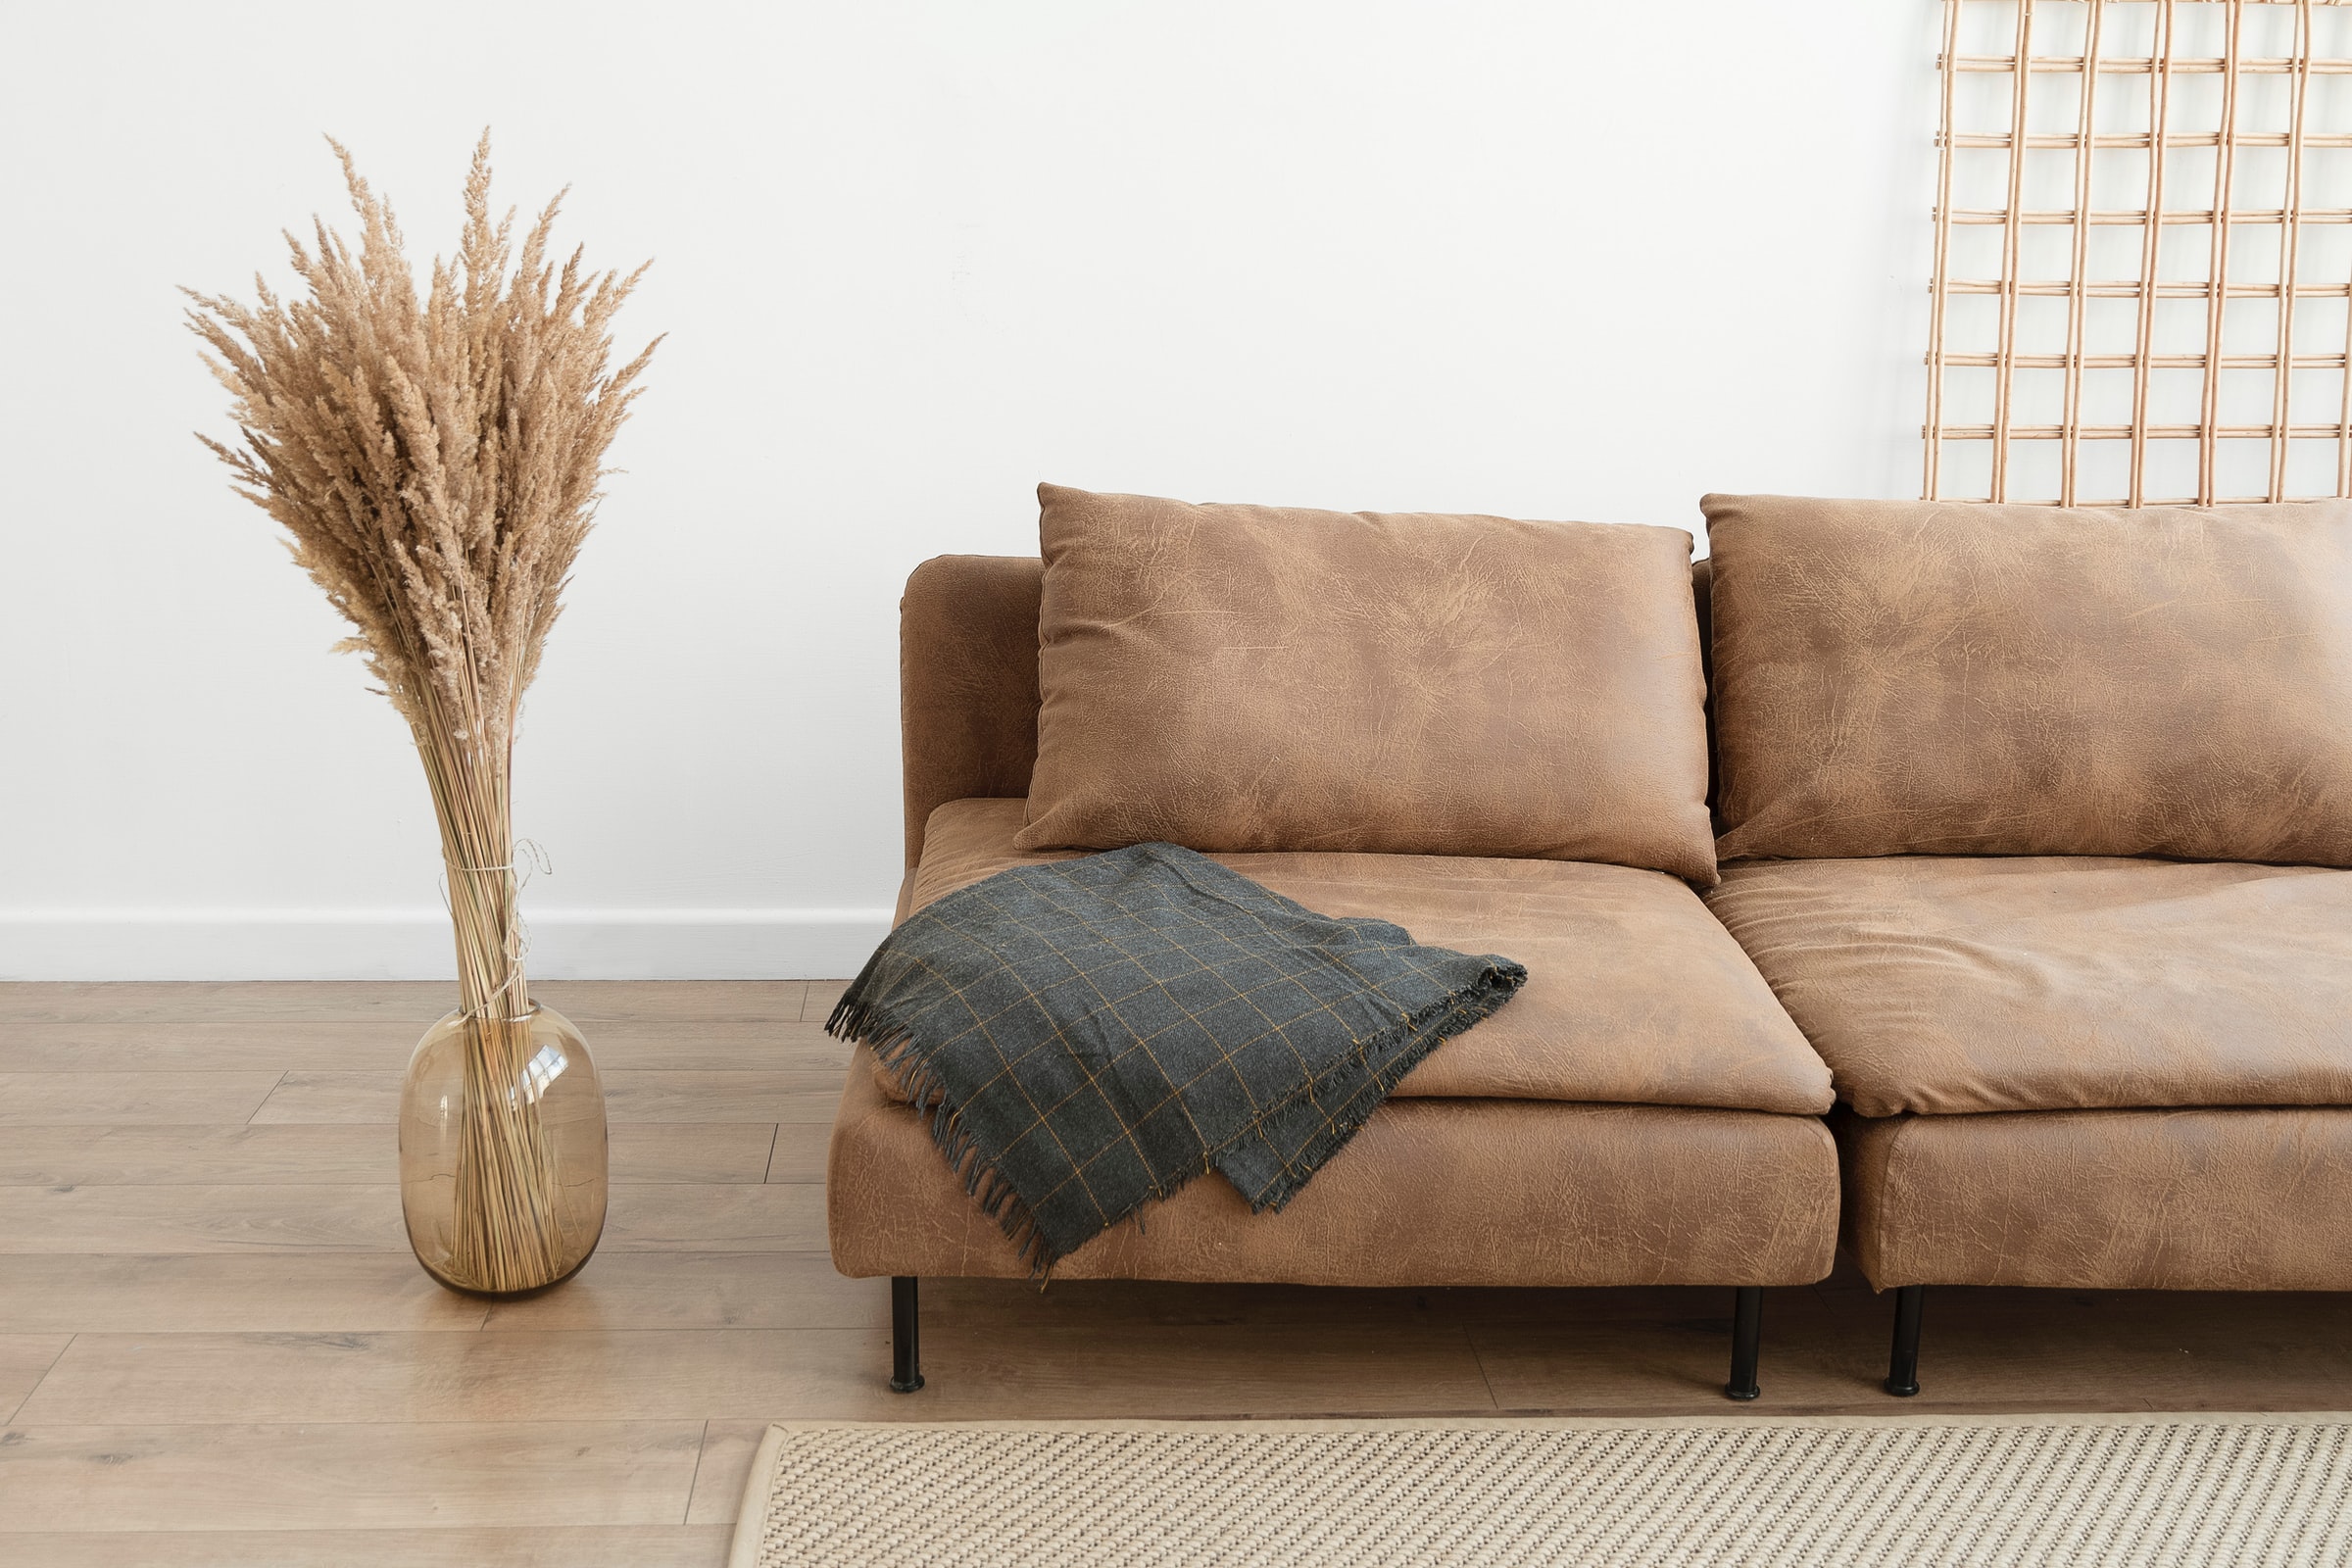 image of sofa